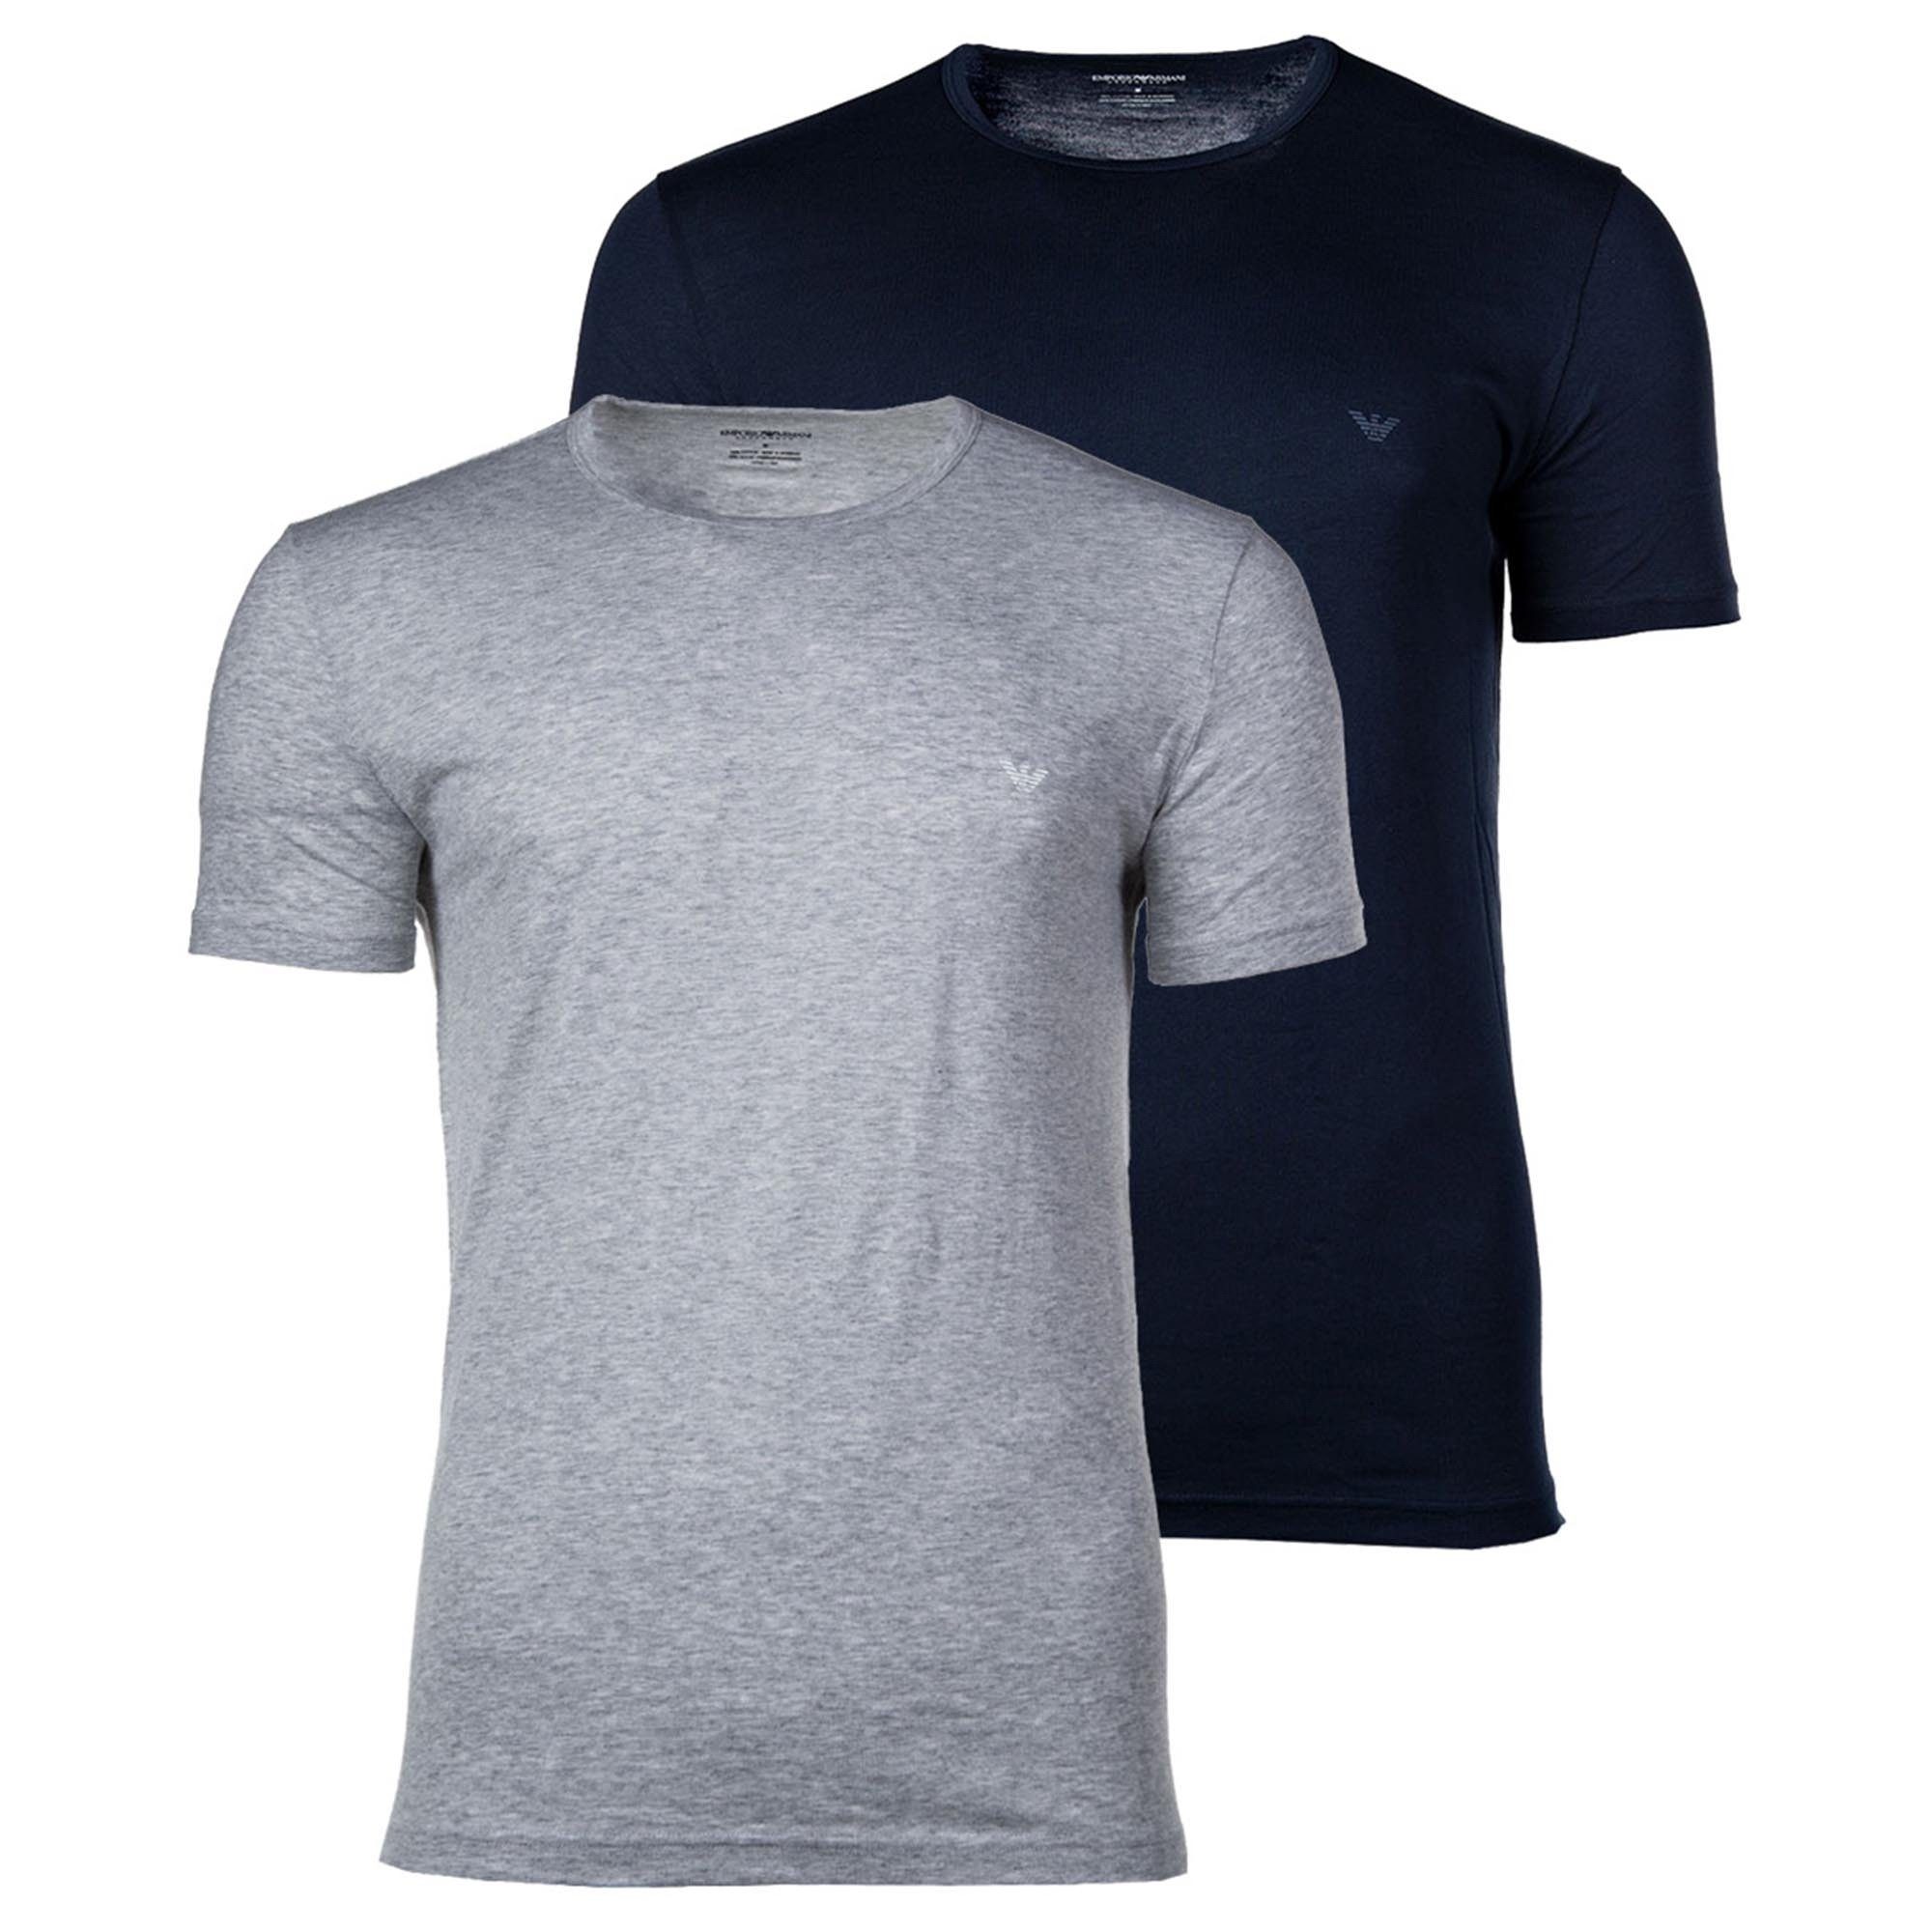 Emporio Armani T-Shirt Herren T-Shirt 2er Pack - Crew Neck, Rundhals Blau/Grau